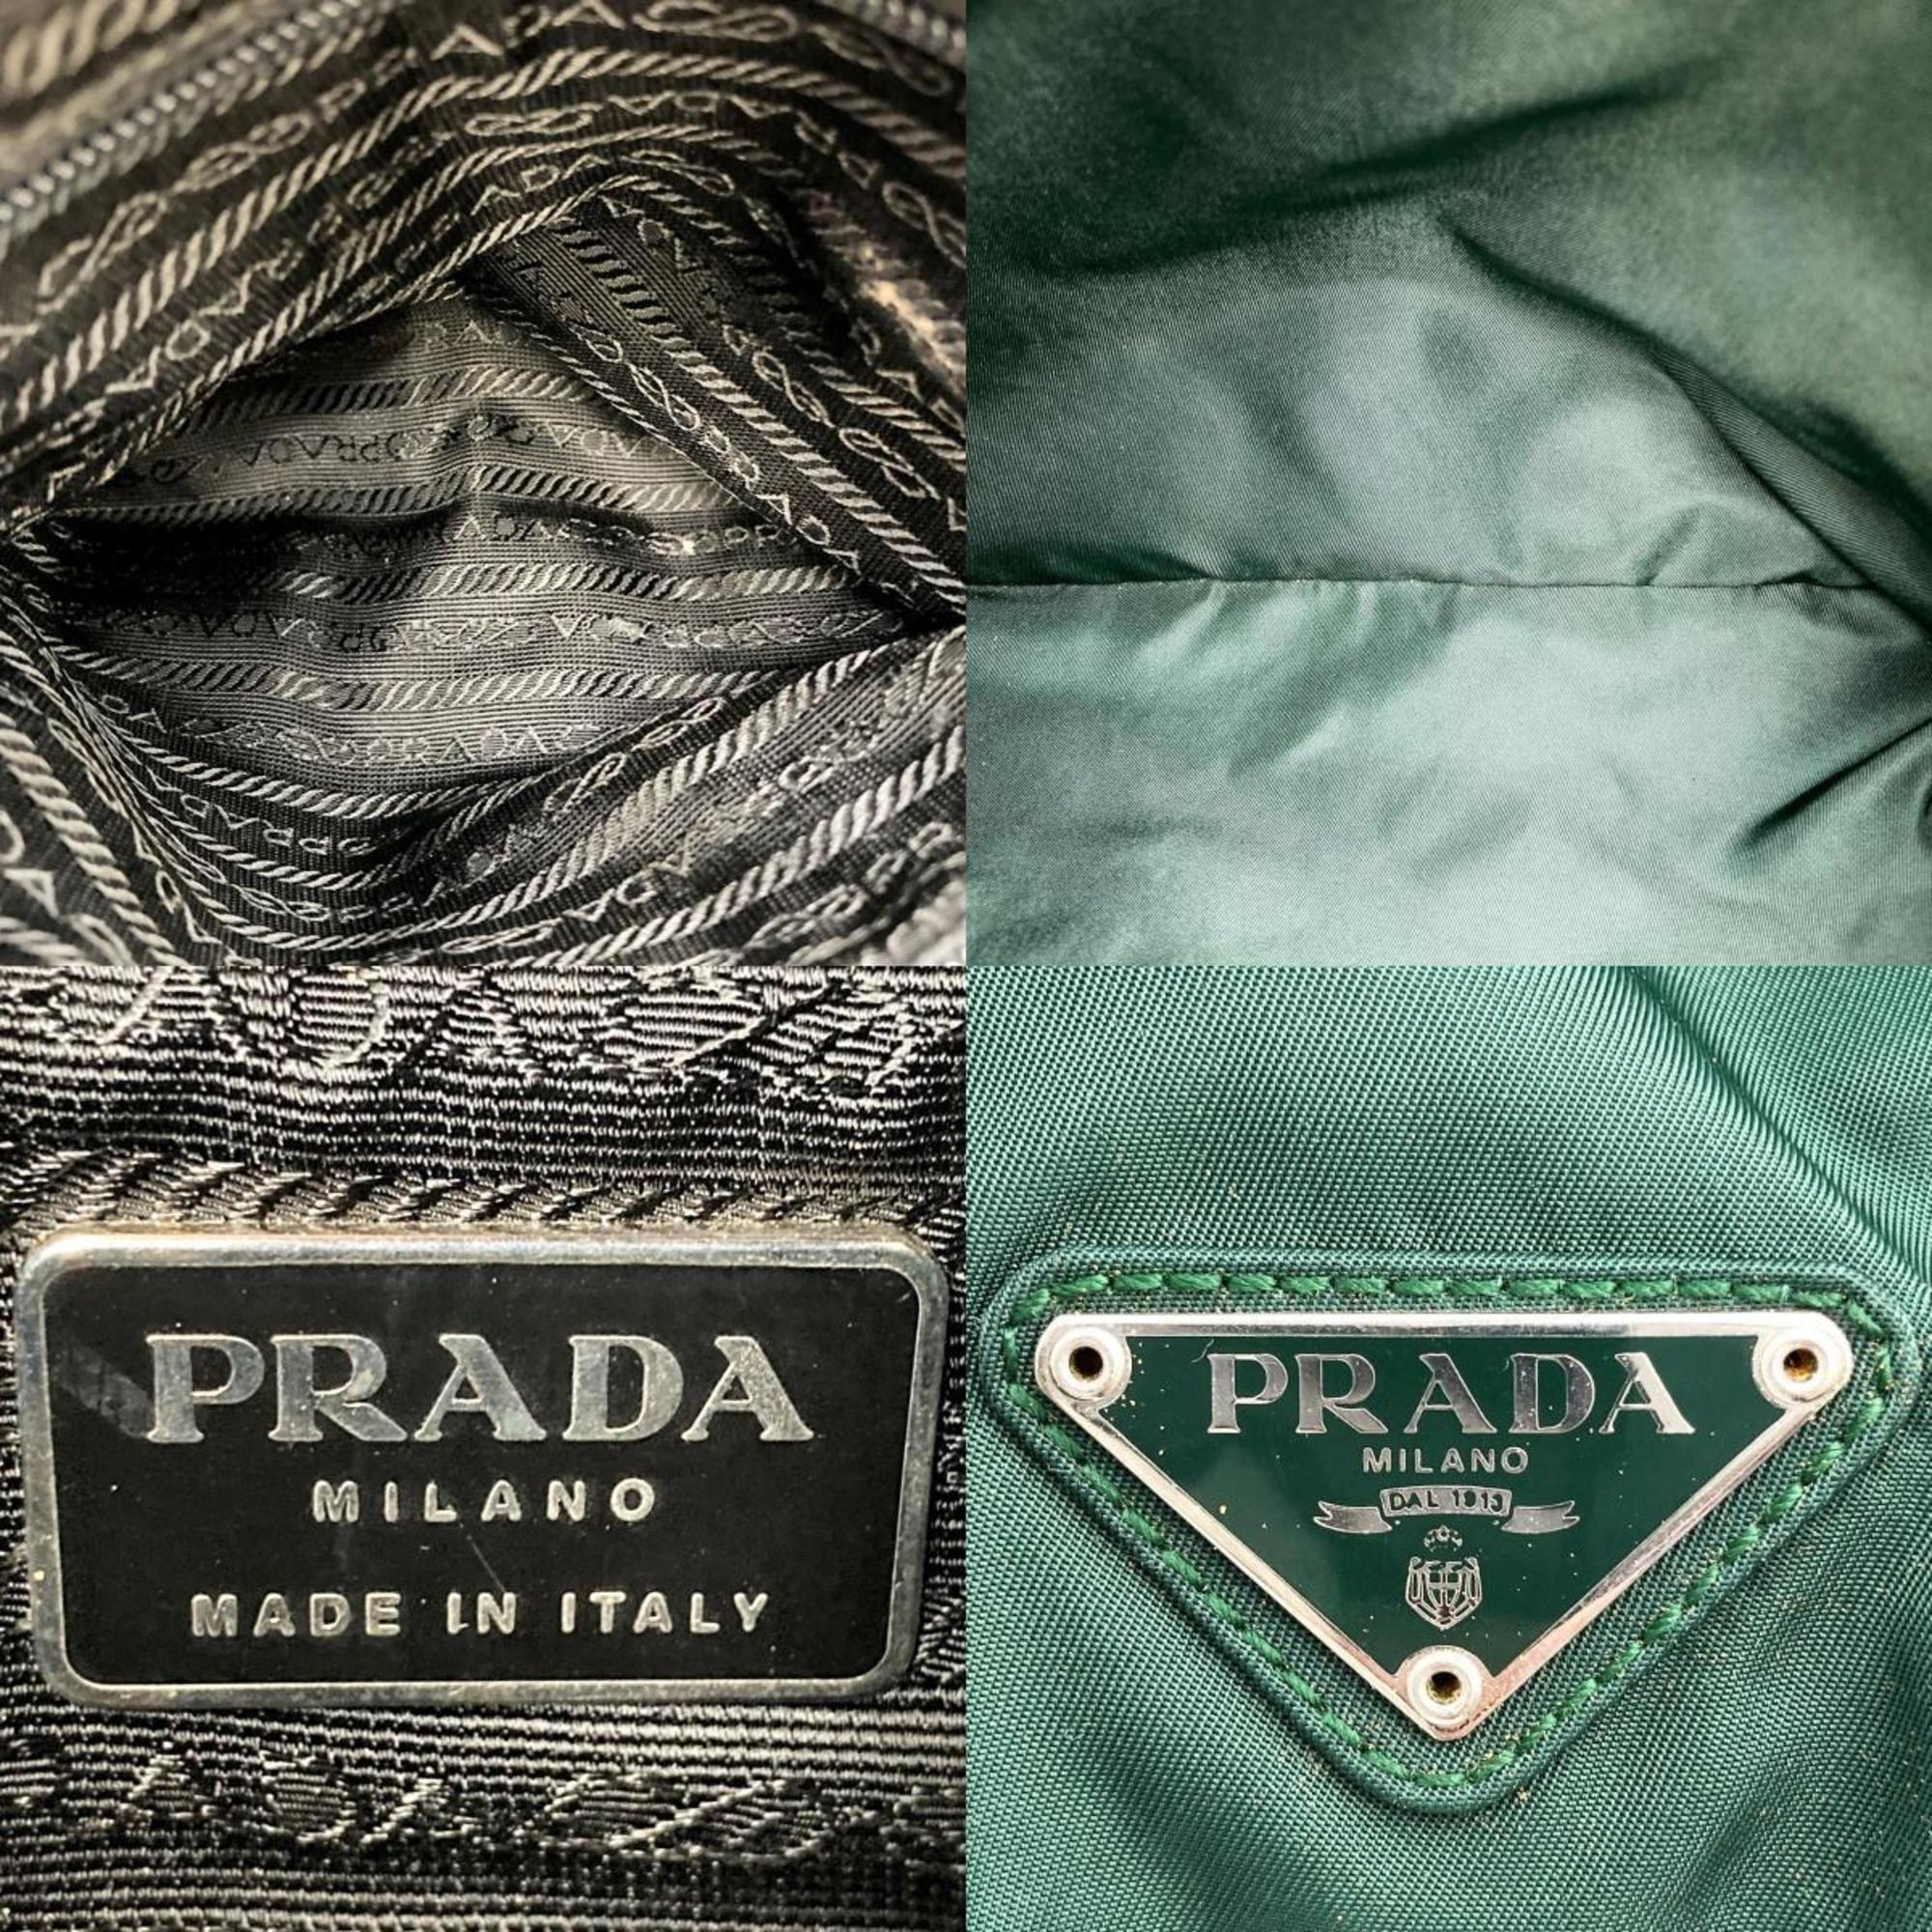 PRADA Prada tote bag shoulder nylon logo plate green ladies men unisex